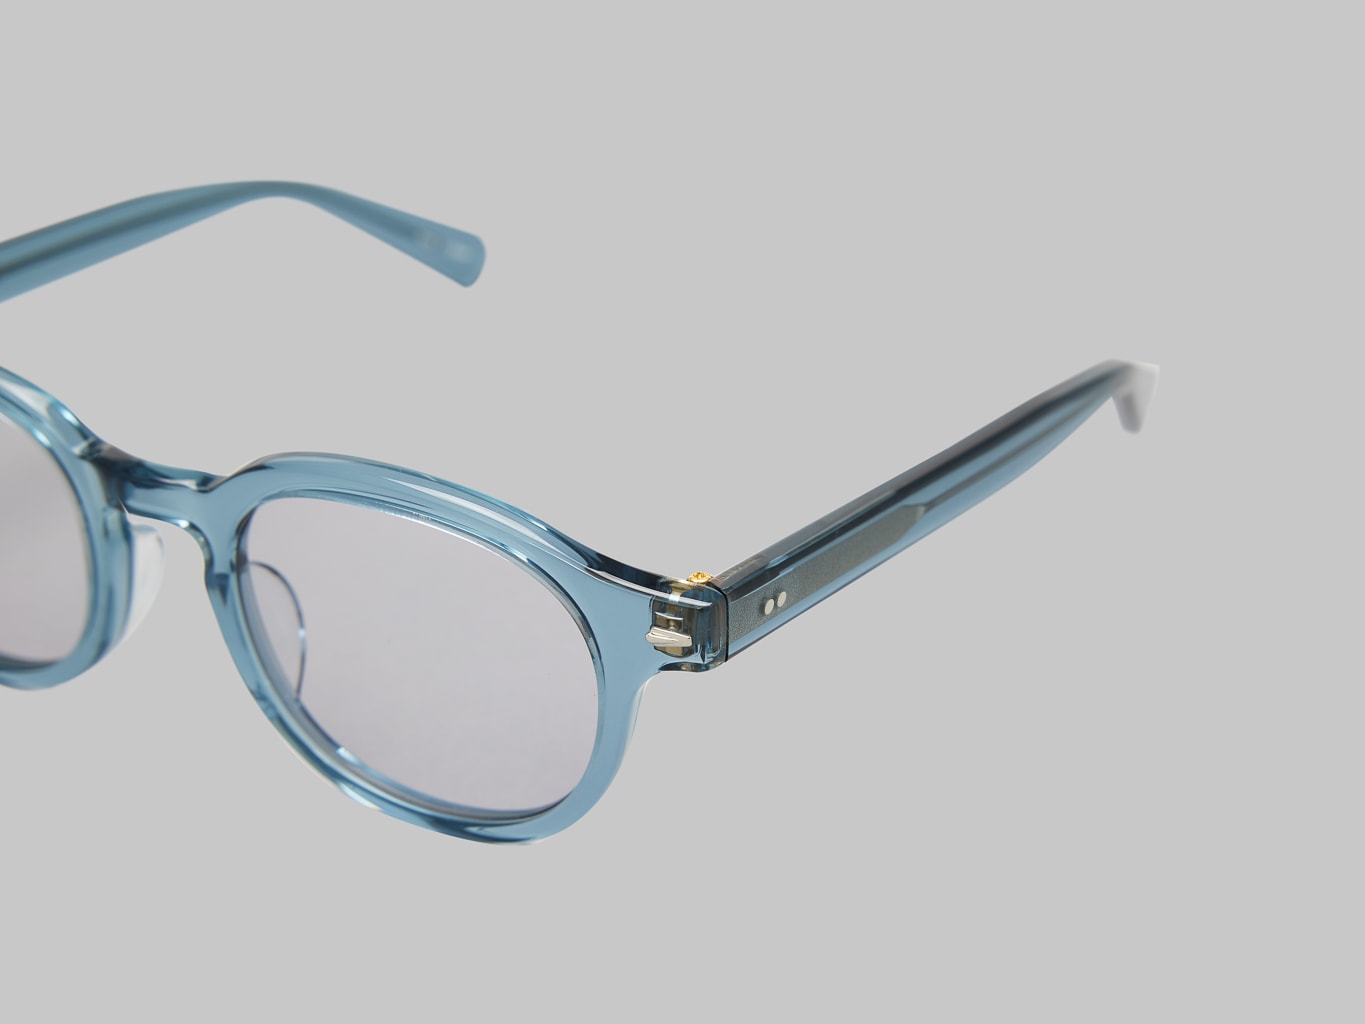 Calee Type Glasses Blue Grey tint lenses